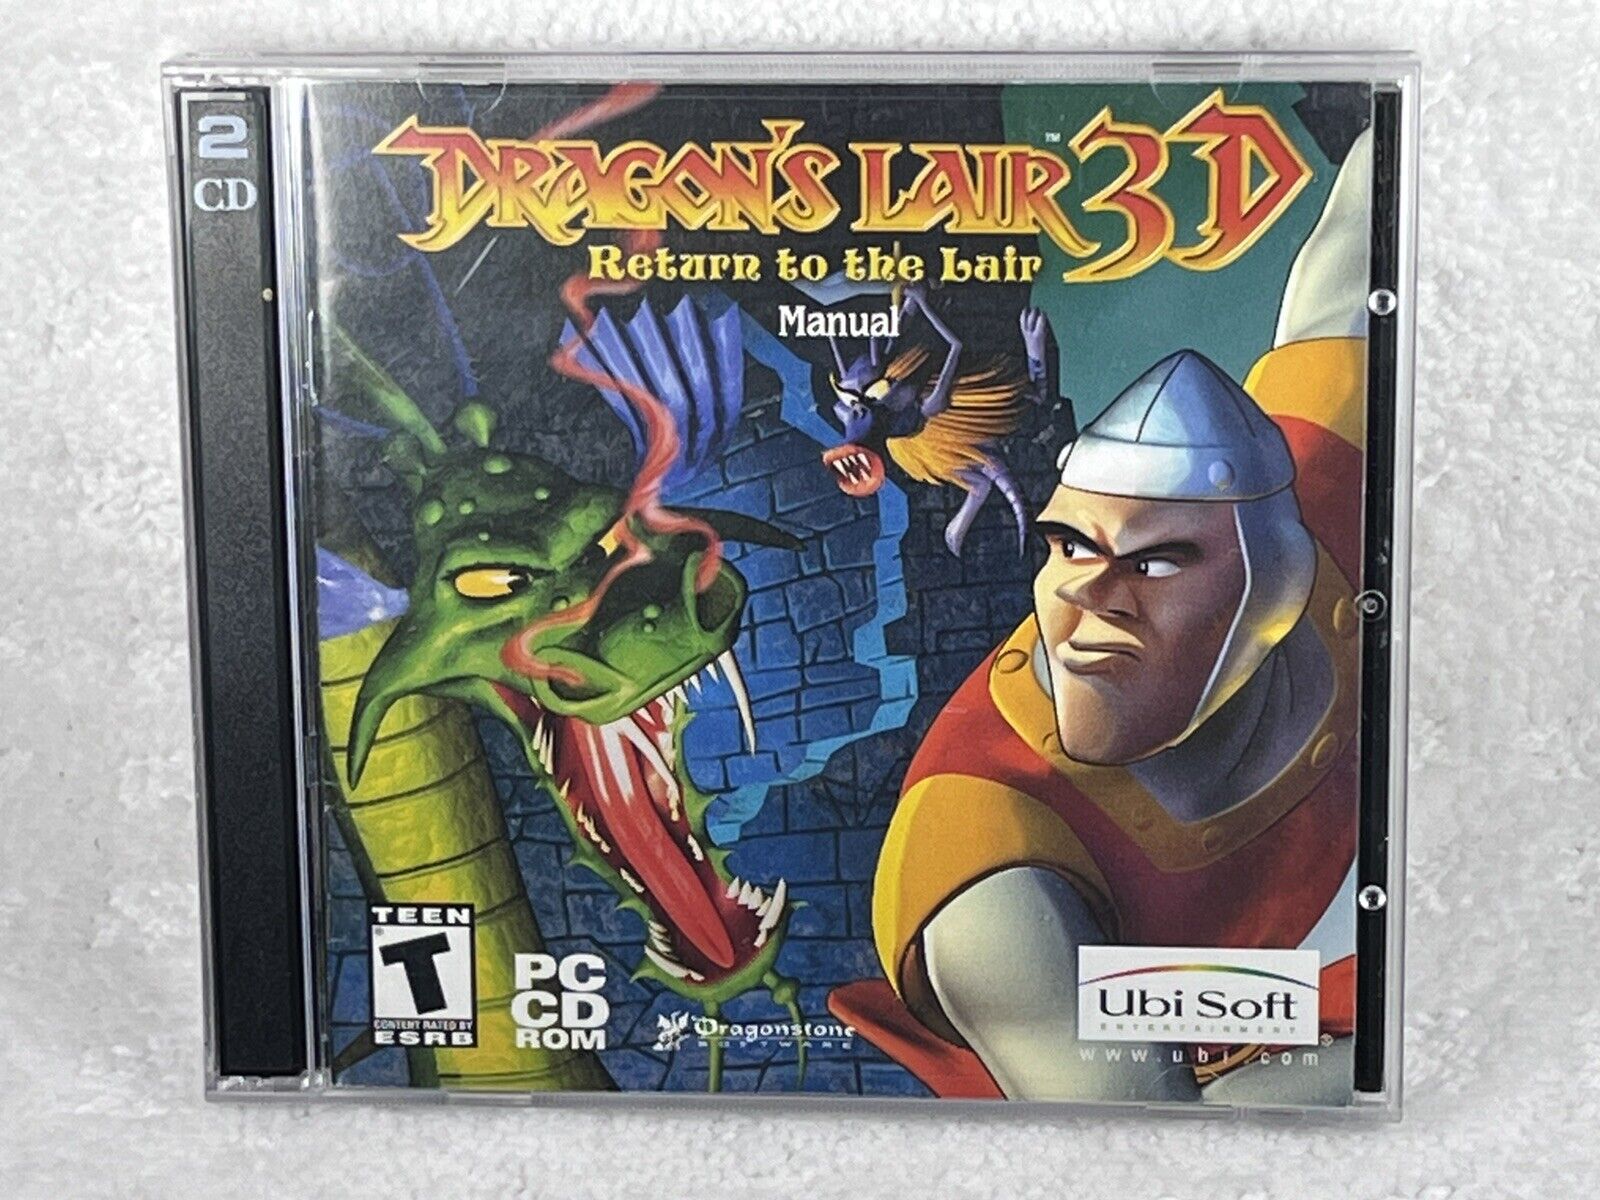 Dragon's Lair 3D: Return to the Lair (PC, 2002, Jewel Case) Super Minty Discs!